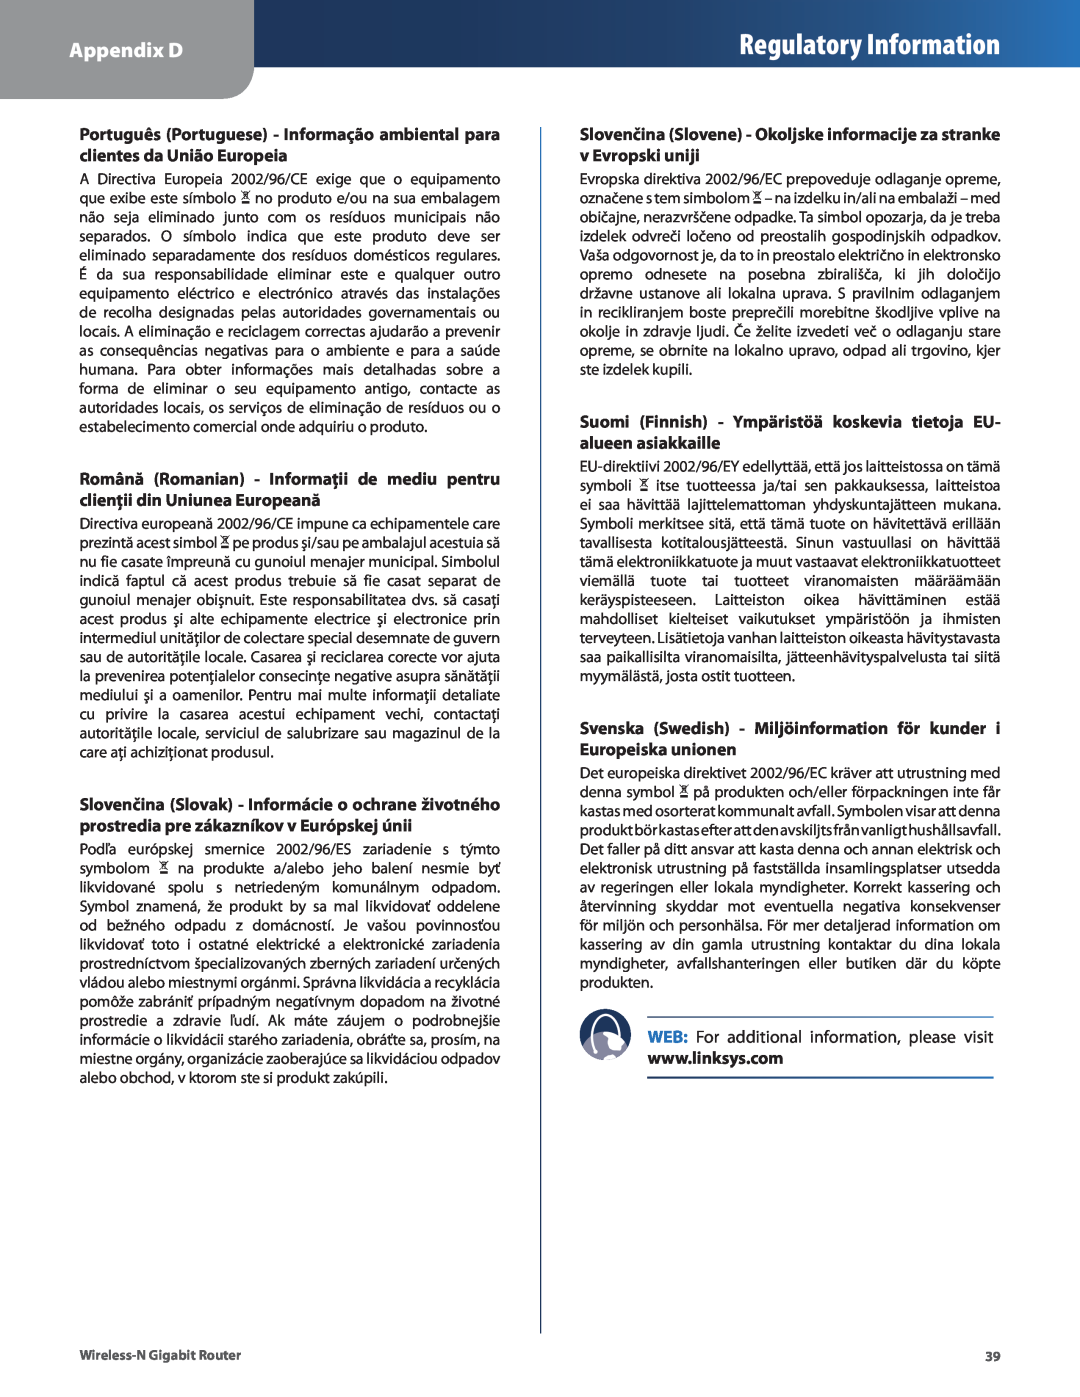 Linksys WRT310N Regulatory Information, Appendix D, Slovenčina Slovene - Okoljske informacije za stranke v Evropski uniji 